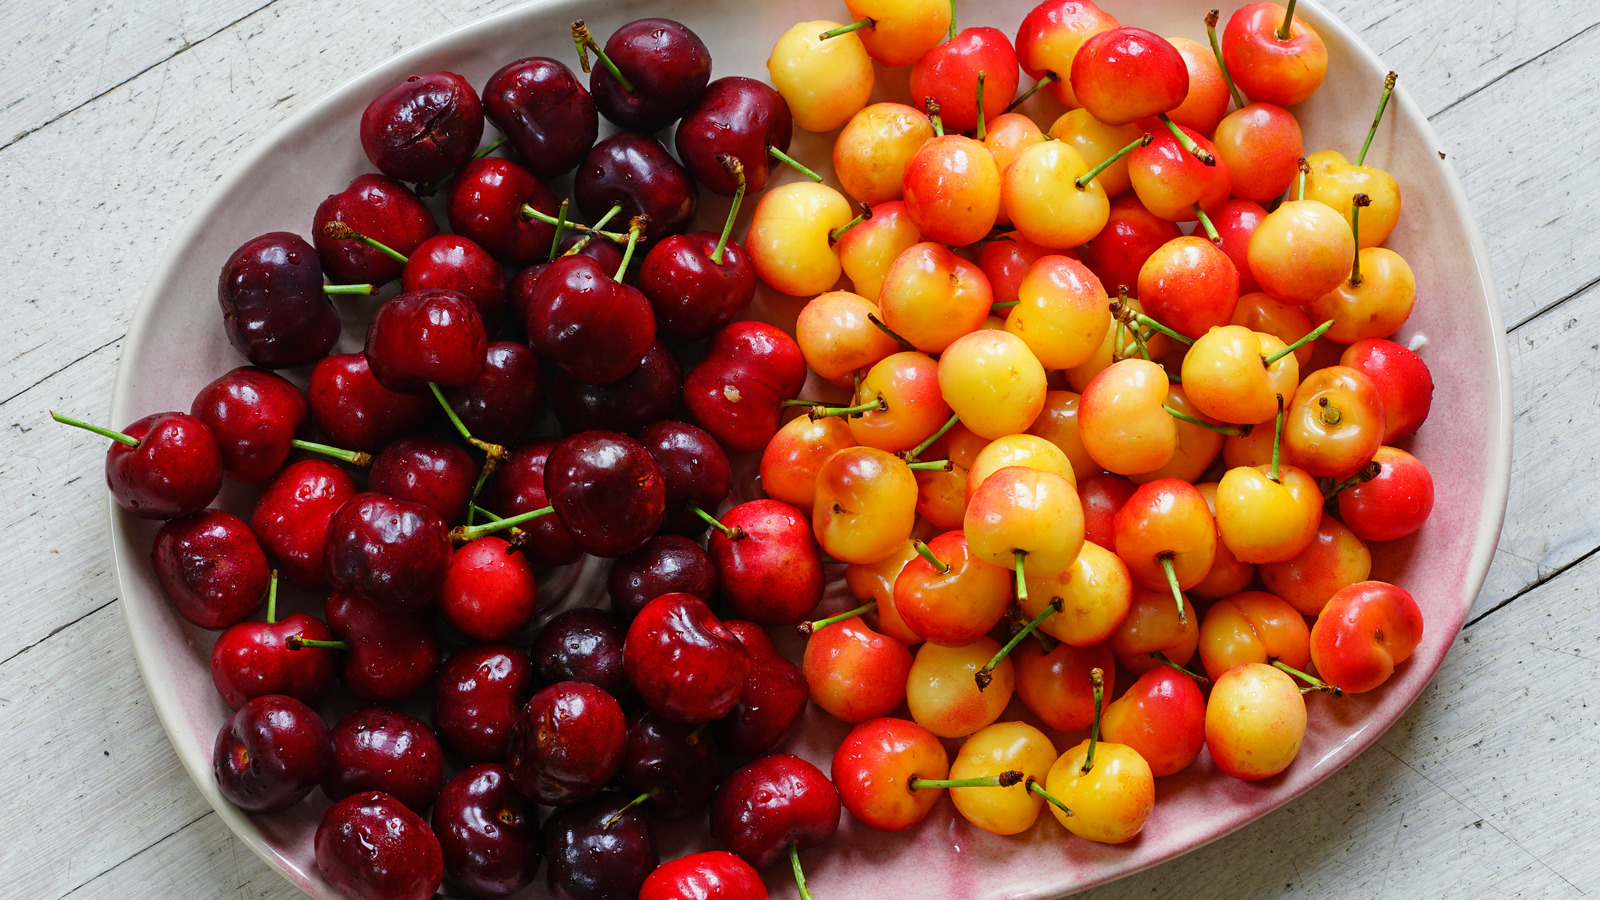 Cherry Fruits, varieties, production, seasonality